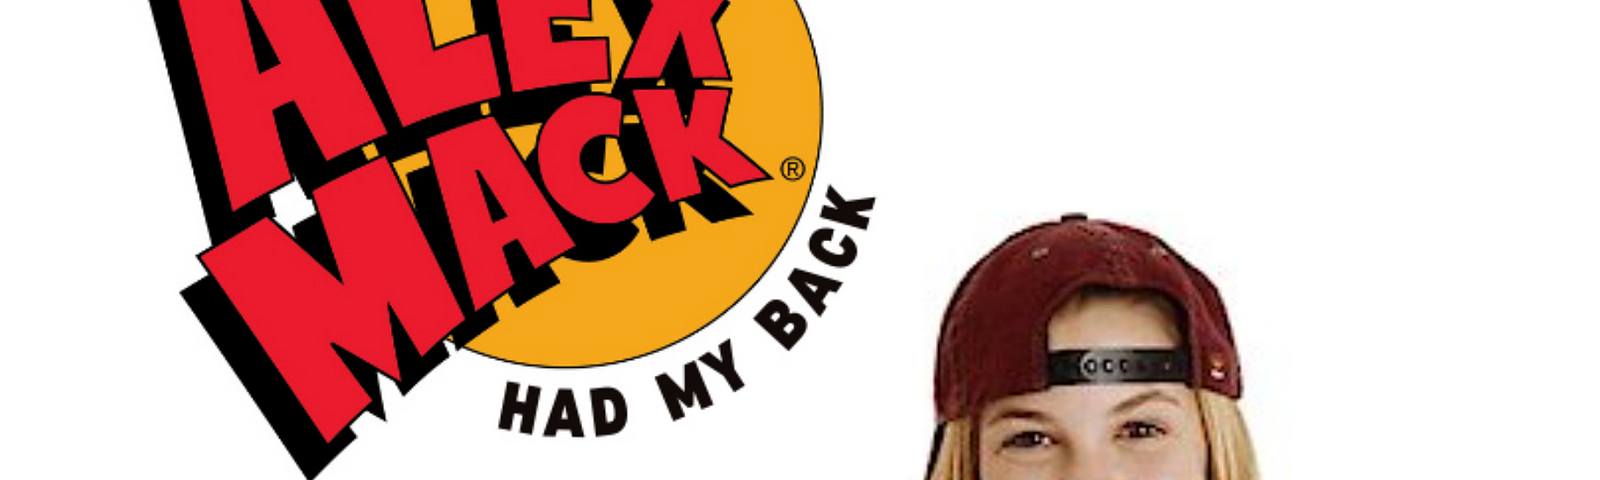 Alex Mack Logo with Alex Mack in baseball hat. (Image Credit: The Movie Database)